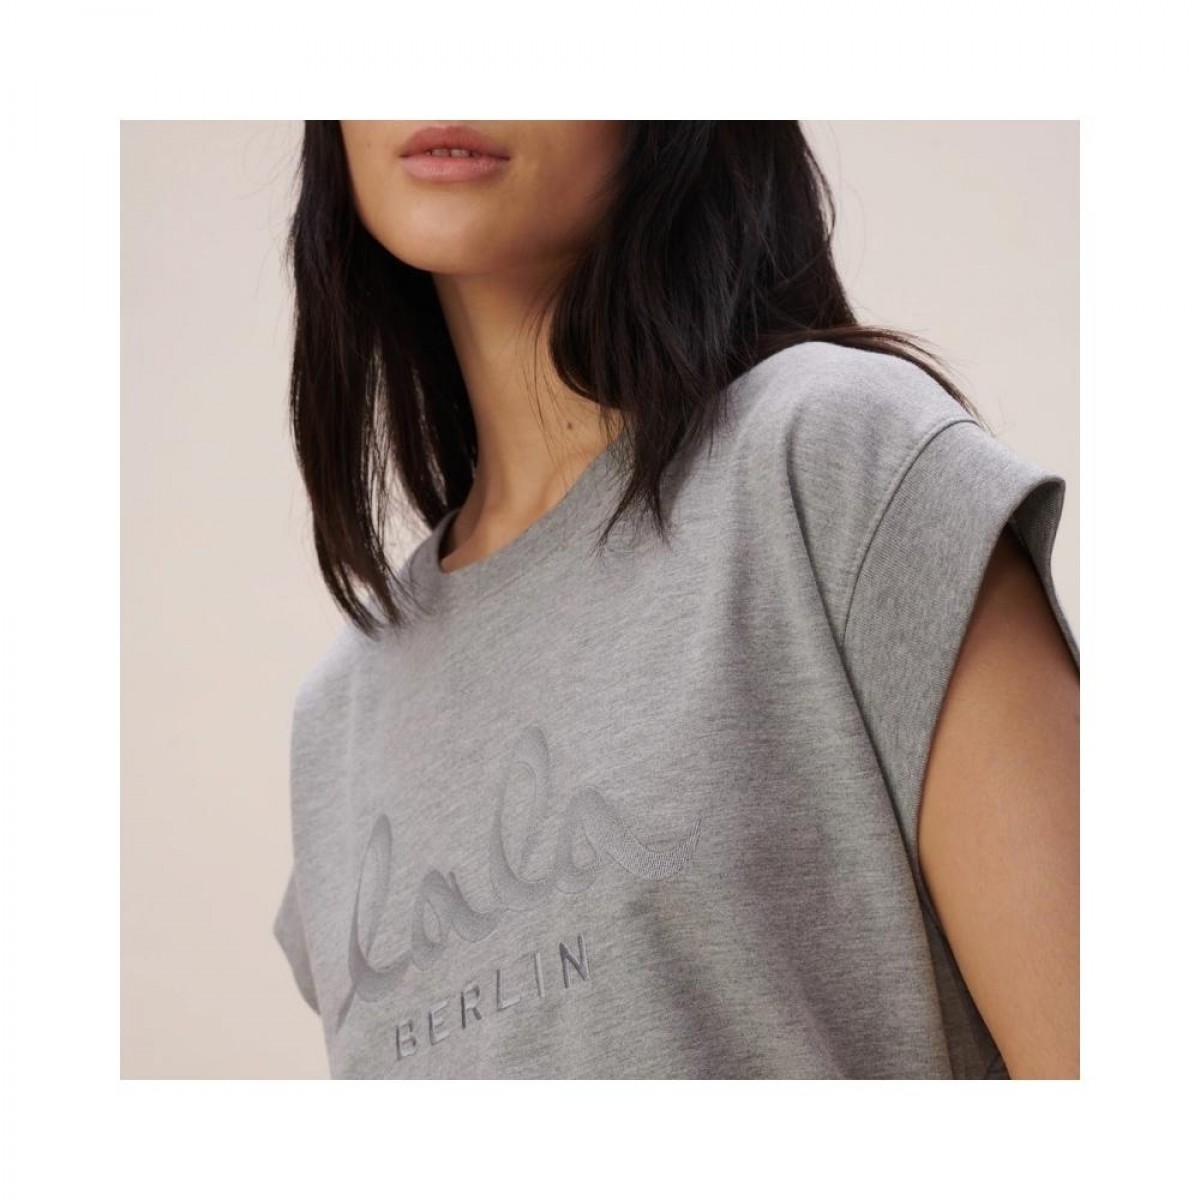 celina t-shirt - grey melange - model logo